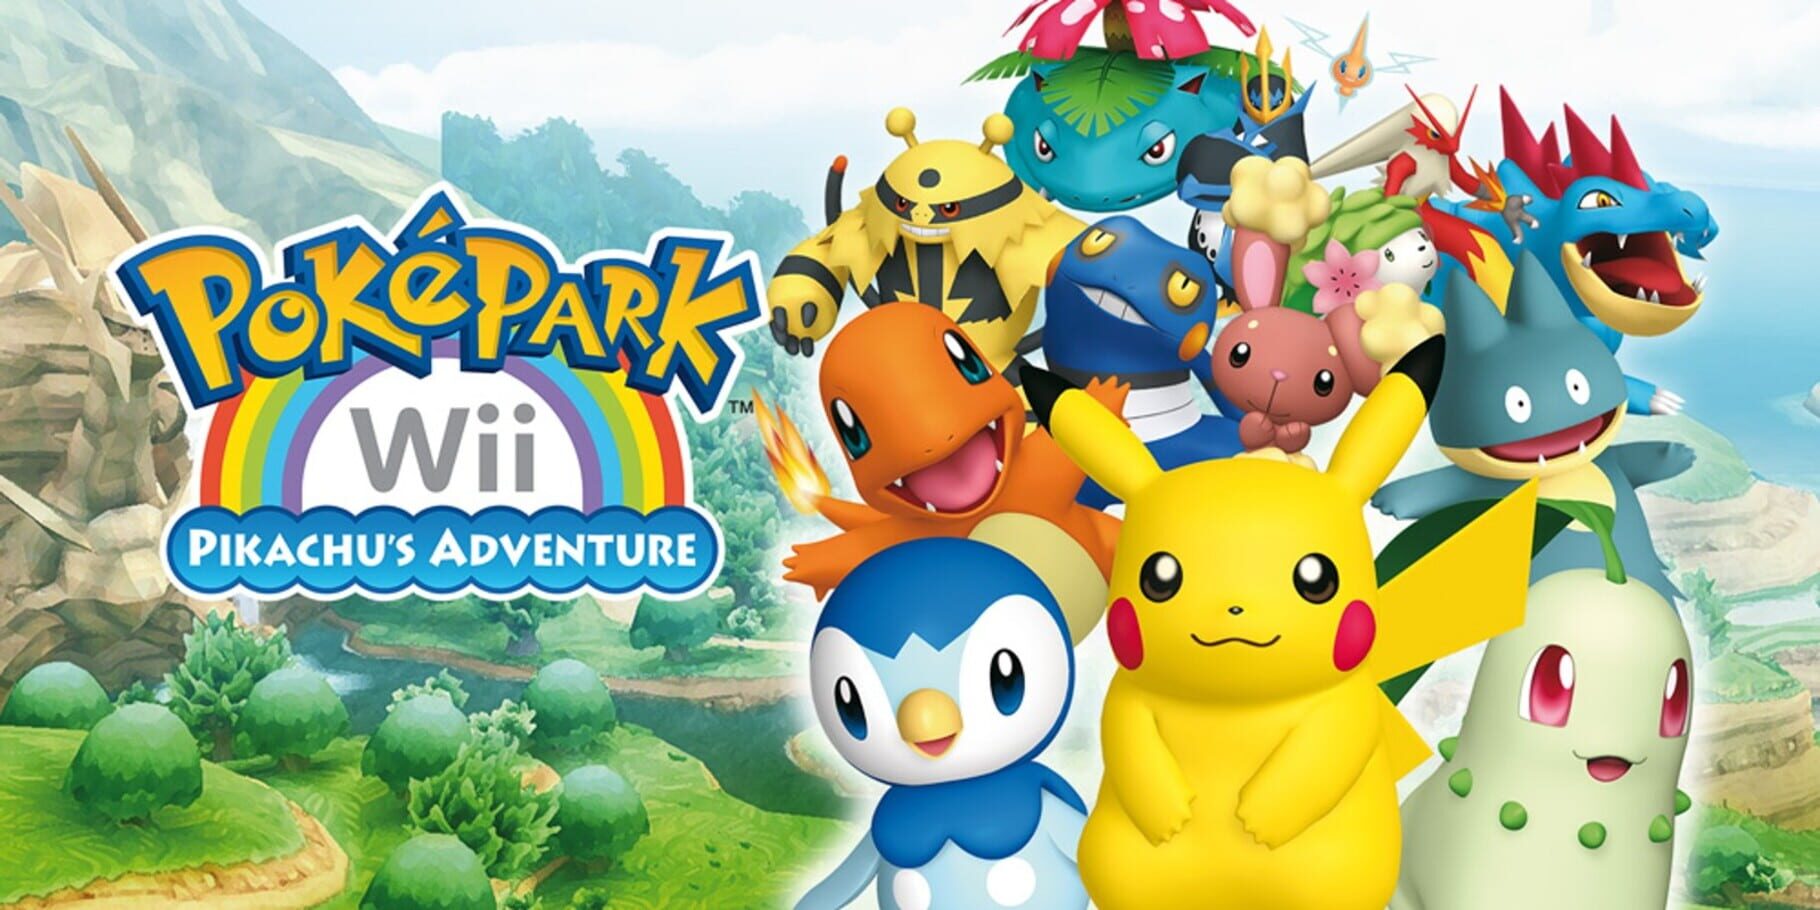 Arte - PokéPark Wii: Pikachu's Adventure